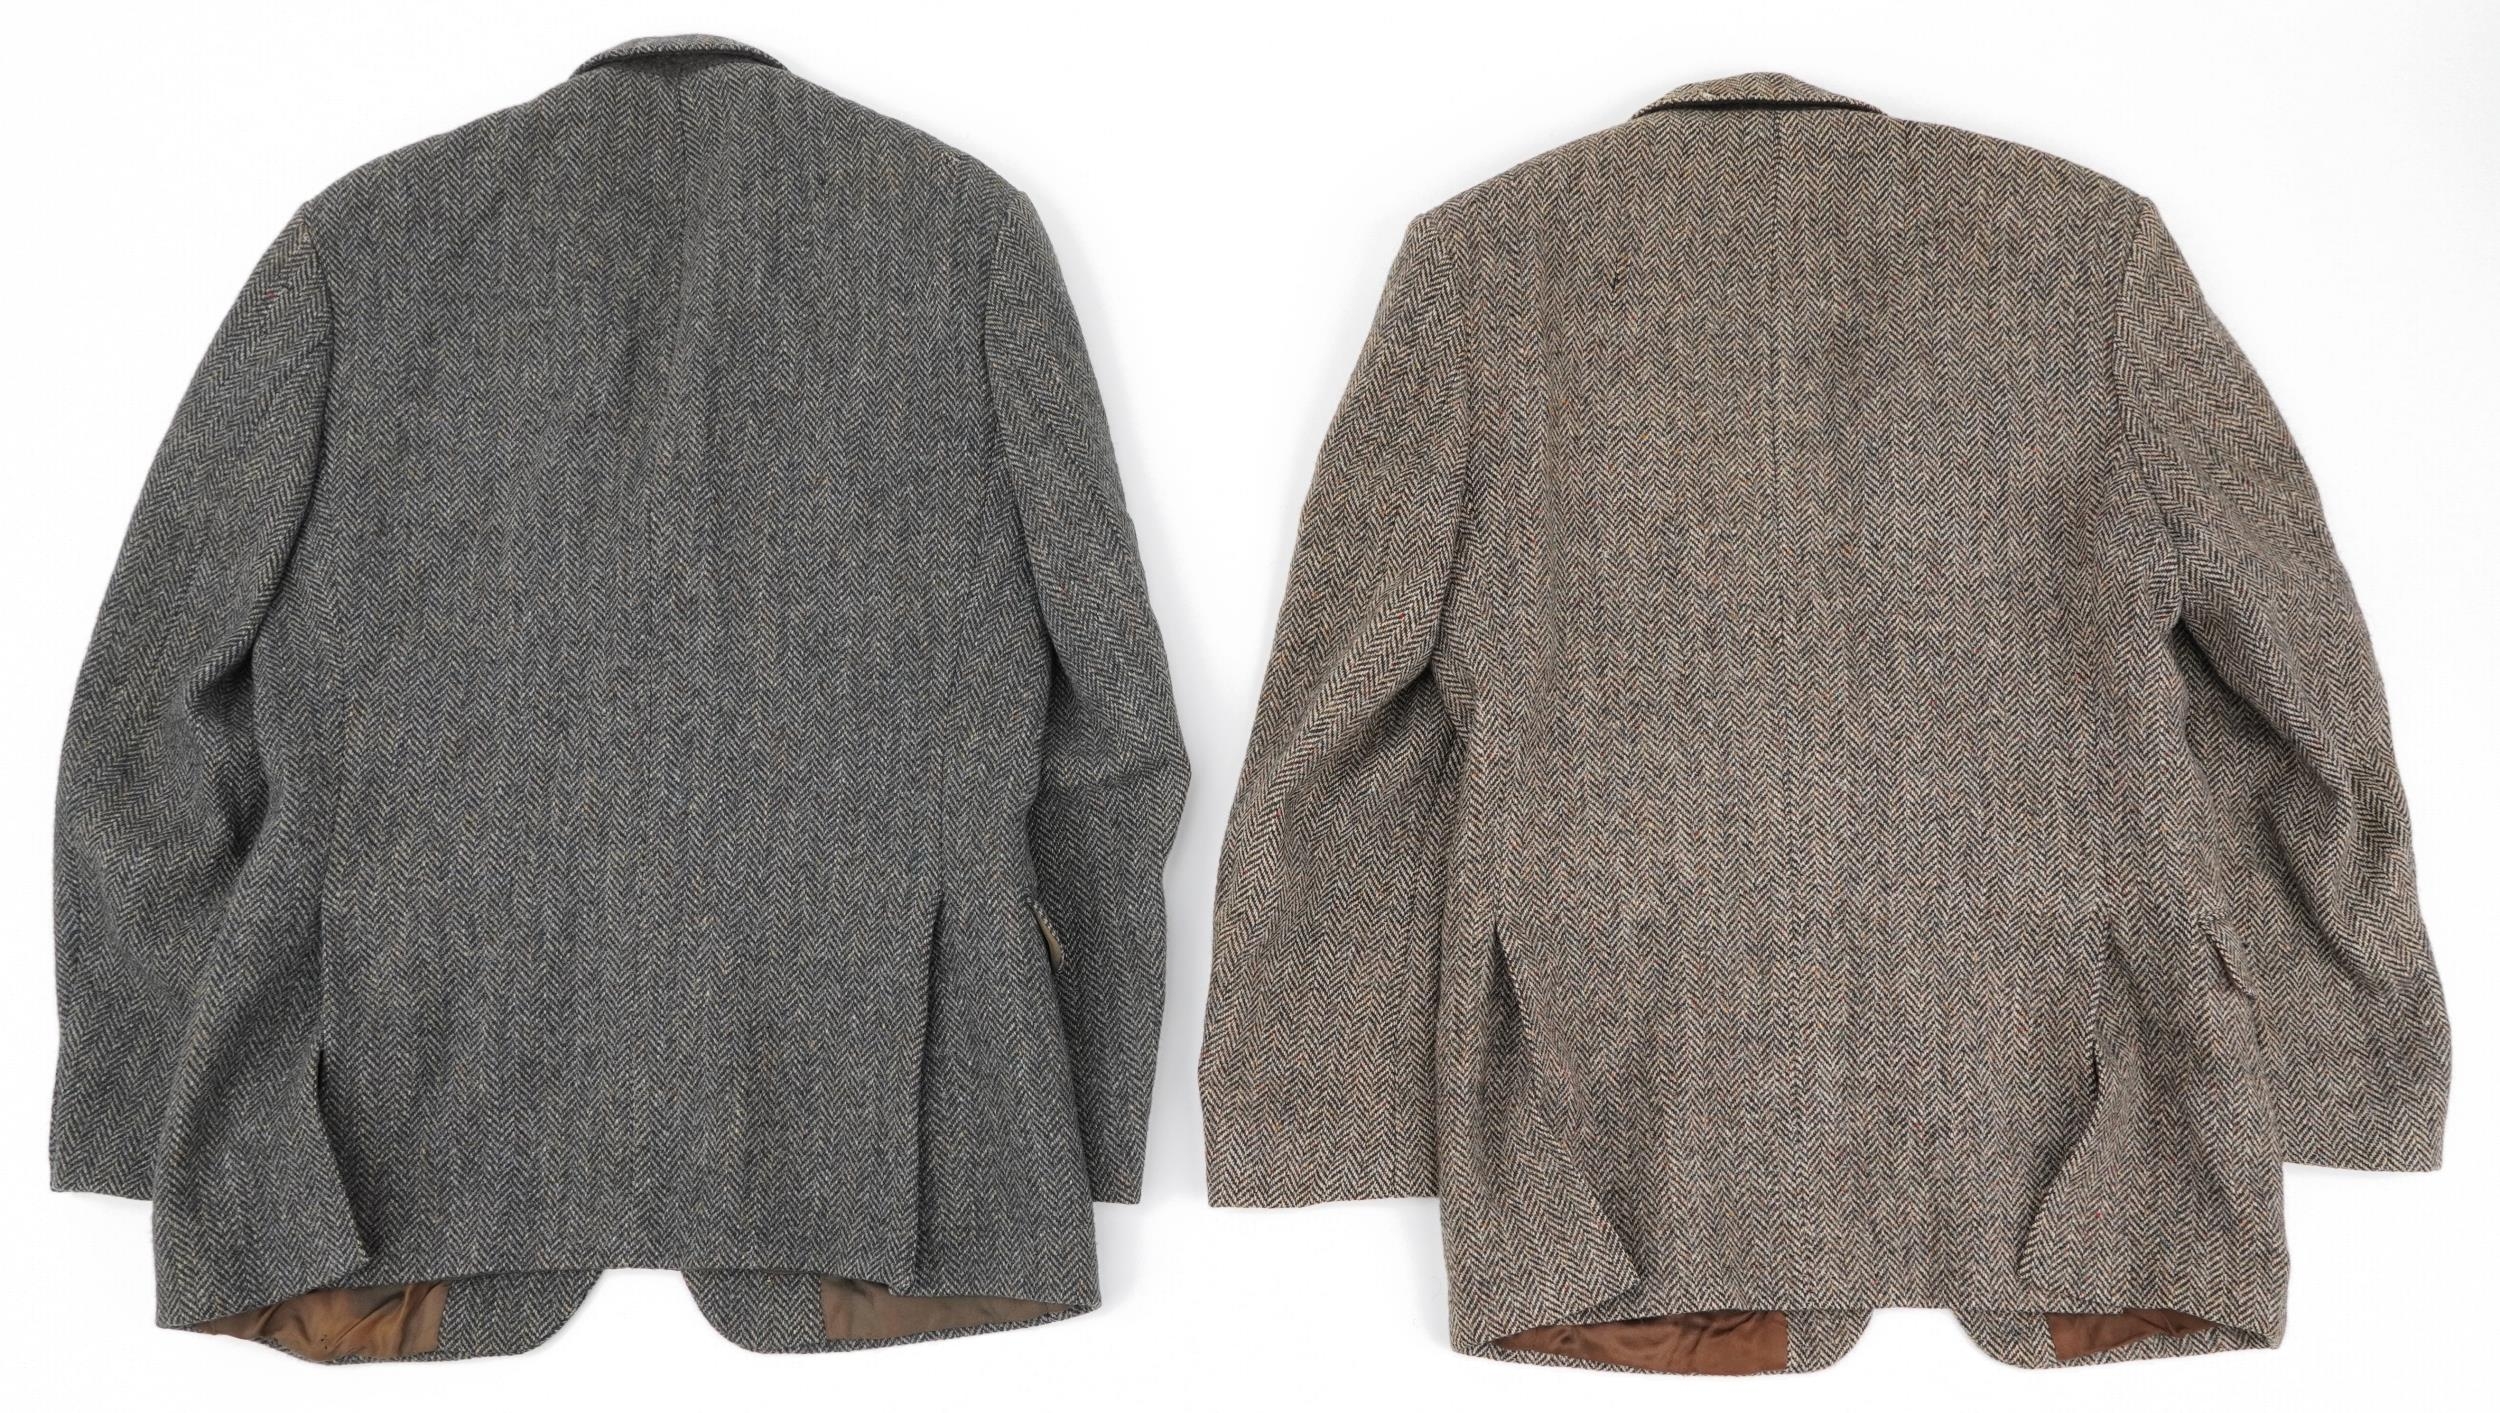 Two Harris tweed gentlemen's pure Scottish wool jackets, 80cm in length - Image 2 of 4